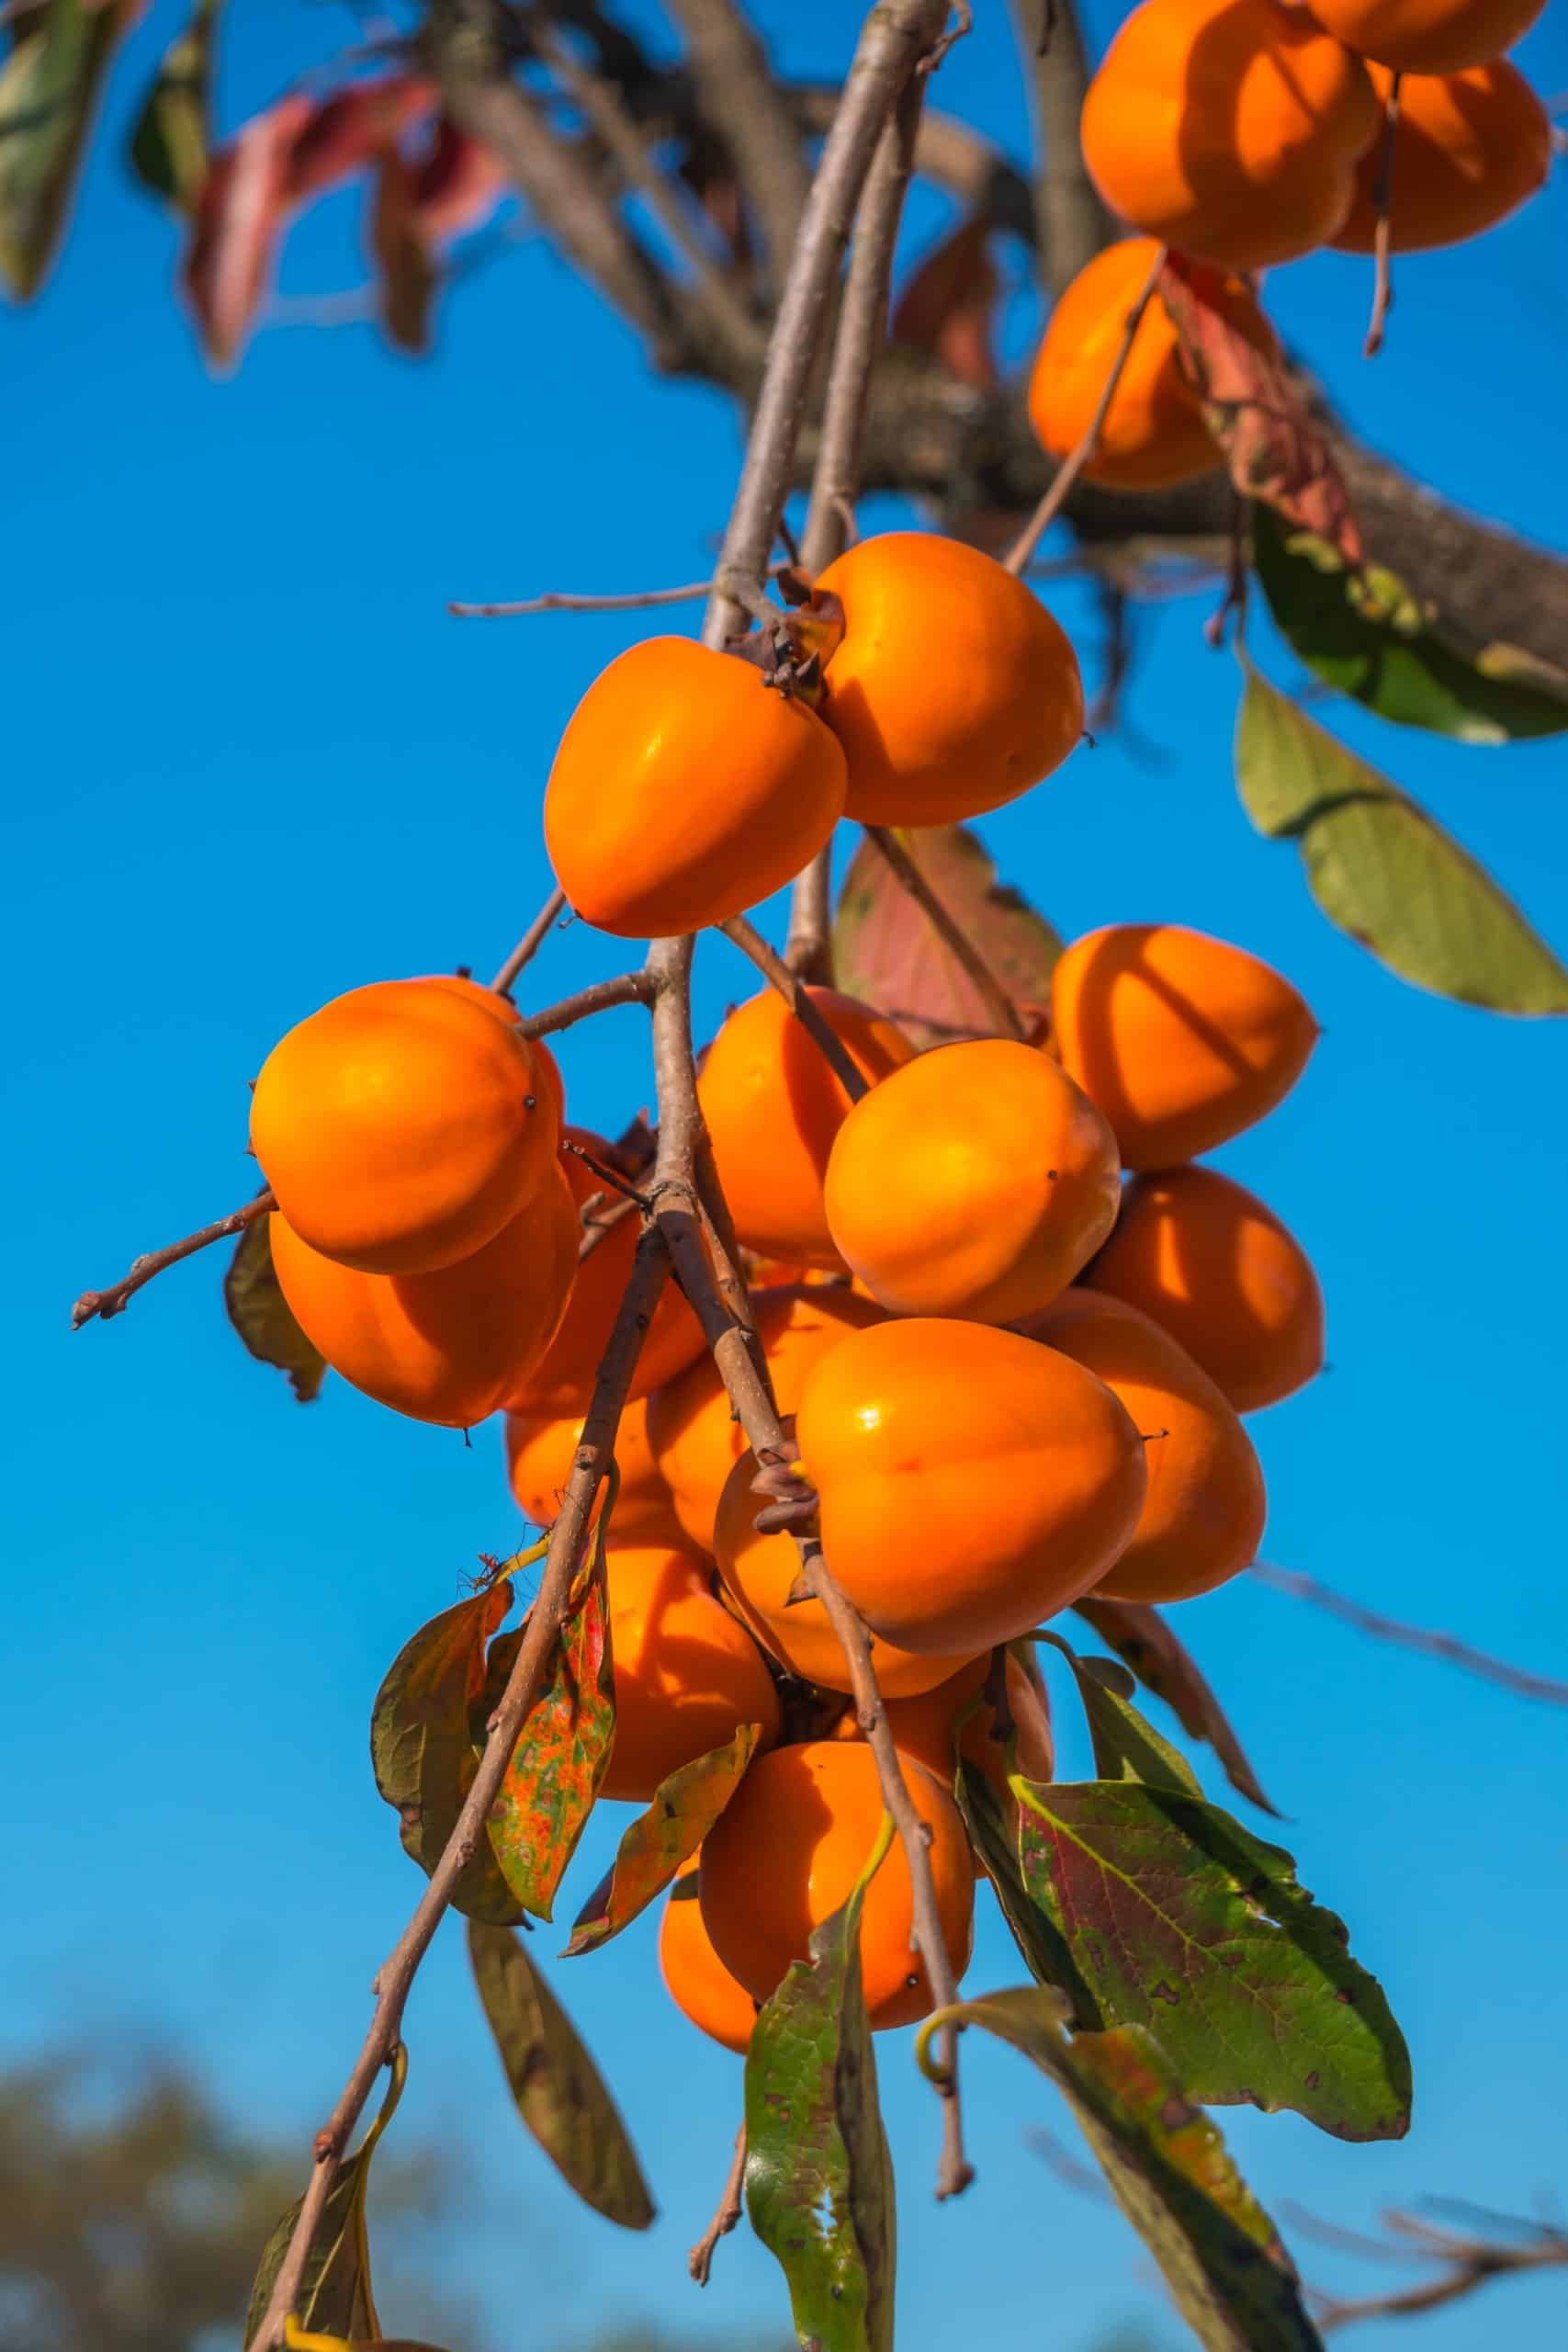 arbol caqui frutas naranjas maduras agenst blue sky otono tiempo scaled